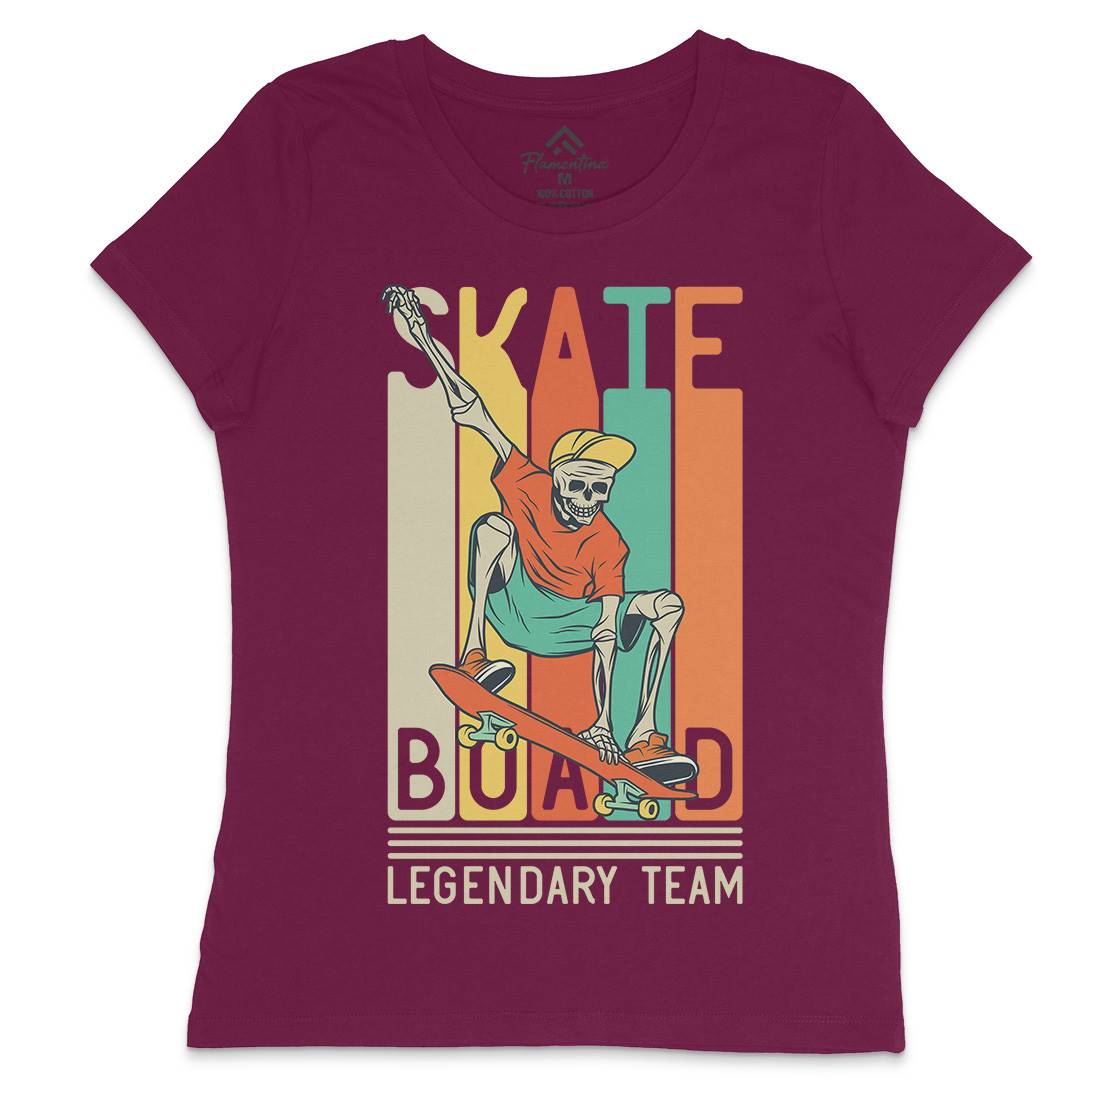 Legendary Team Womens Crew Neck T-Shirt Skate D952